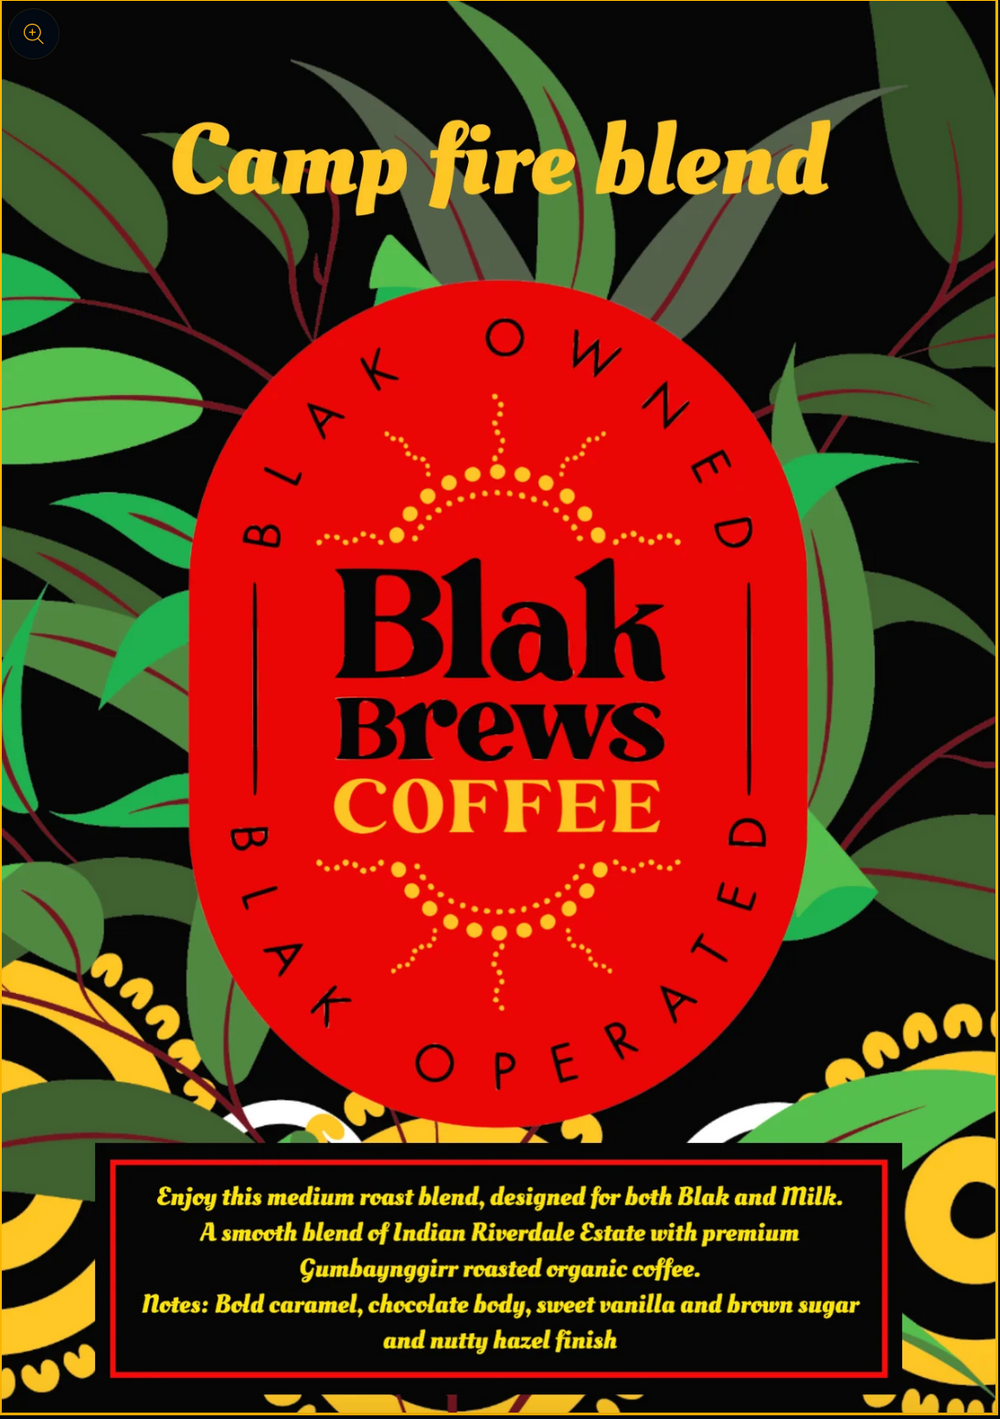 Blak Brews Coffee - Campfire Blend 5oog